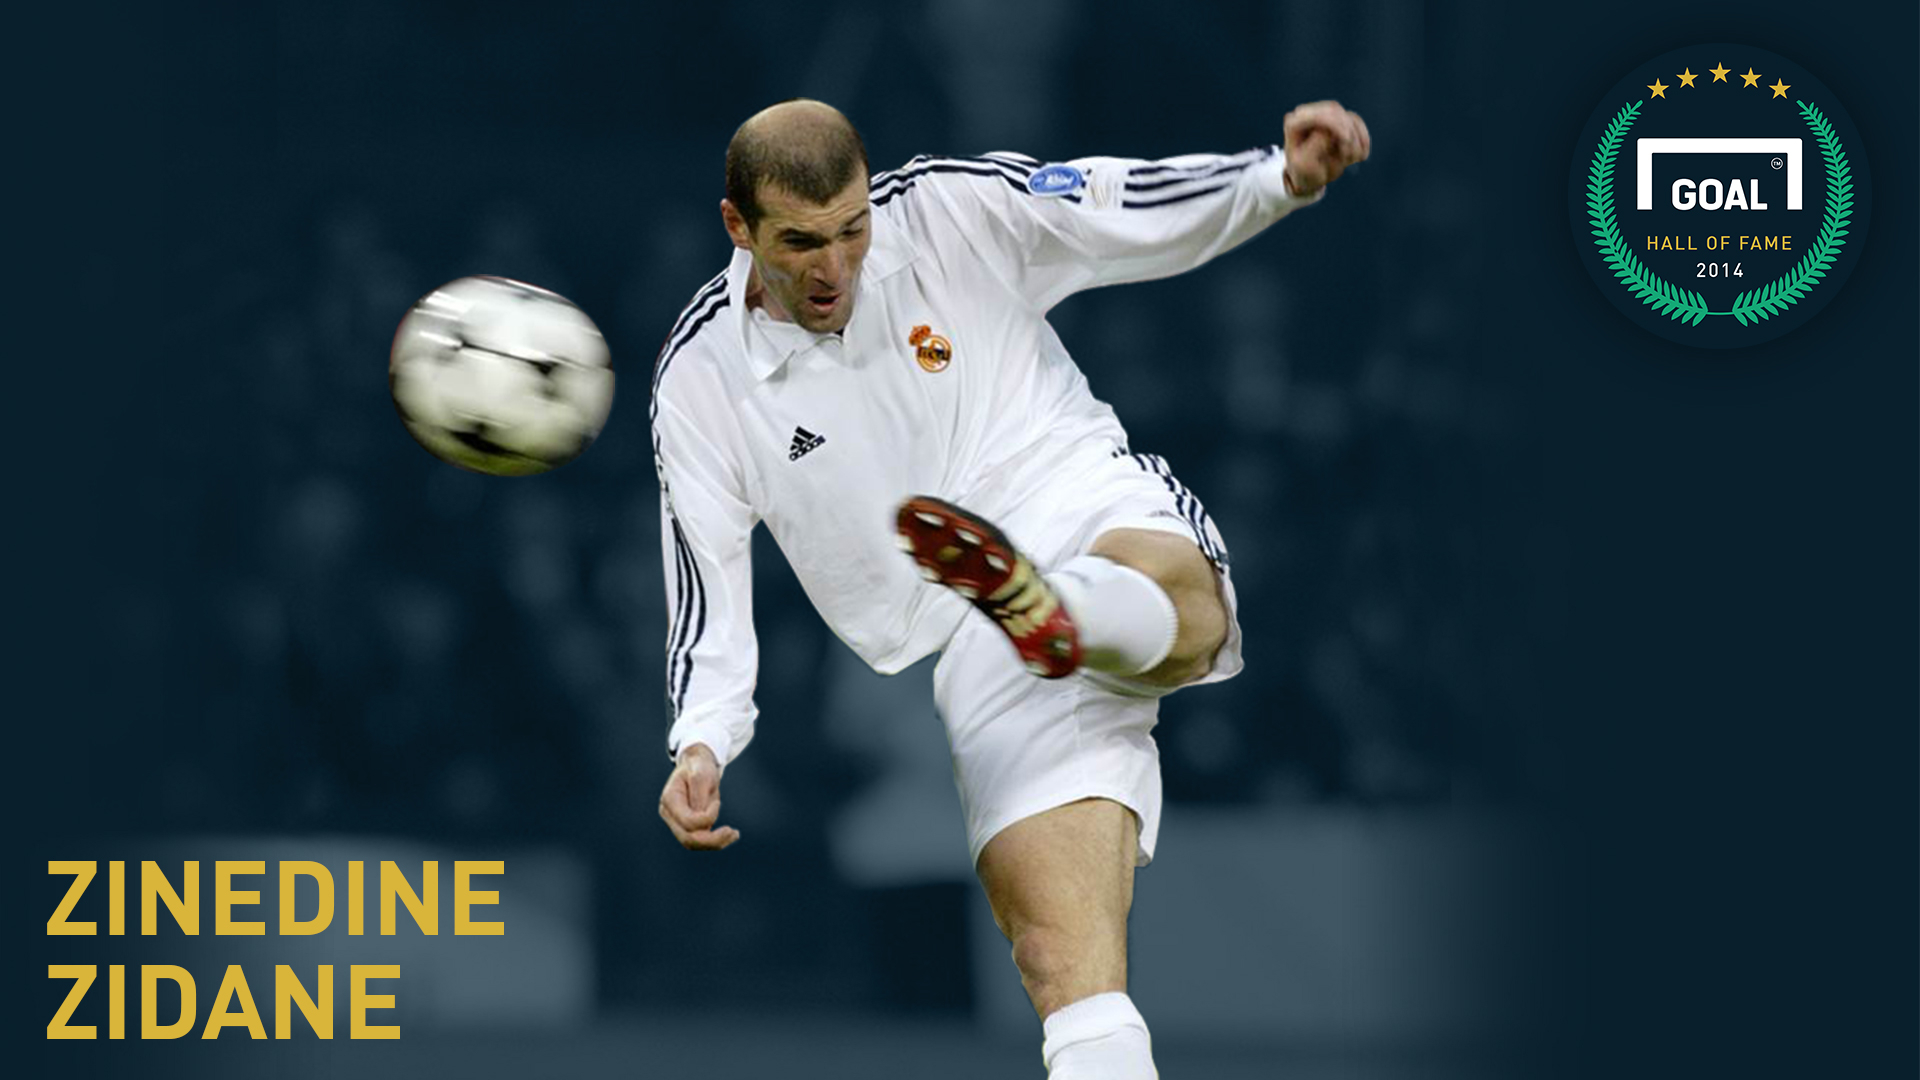 1920x1080 Gallery: Hall of Fame Zinedine Zidane